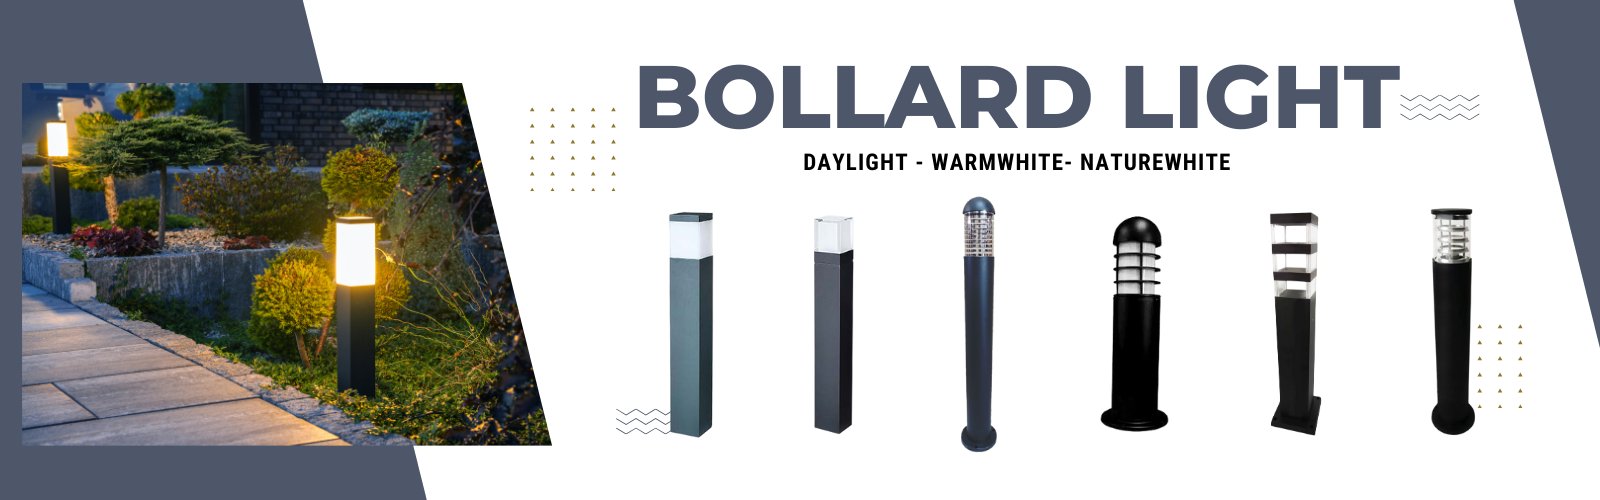 LED Bollard Lights Ecoshift Shopify